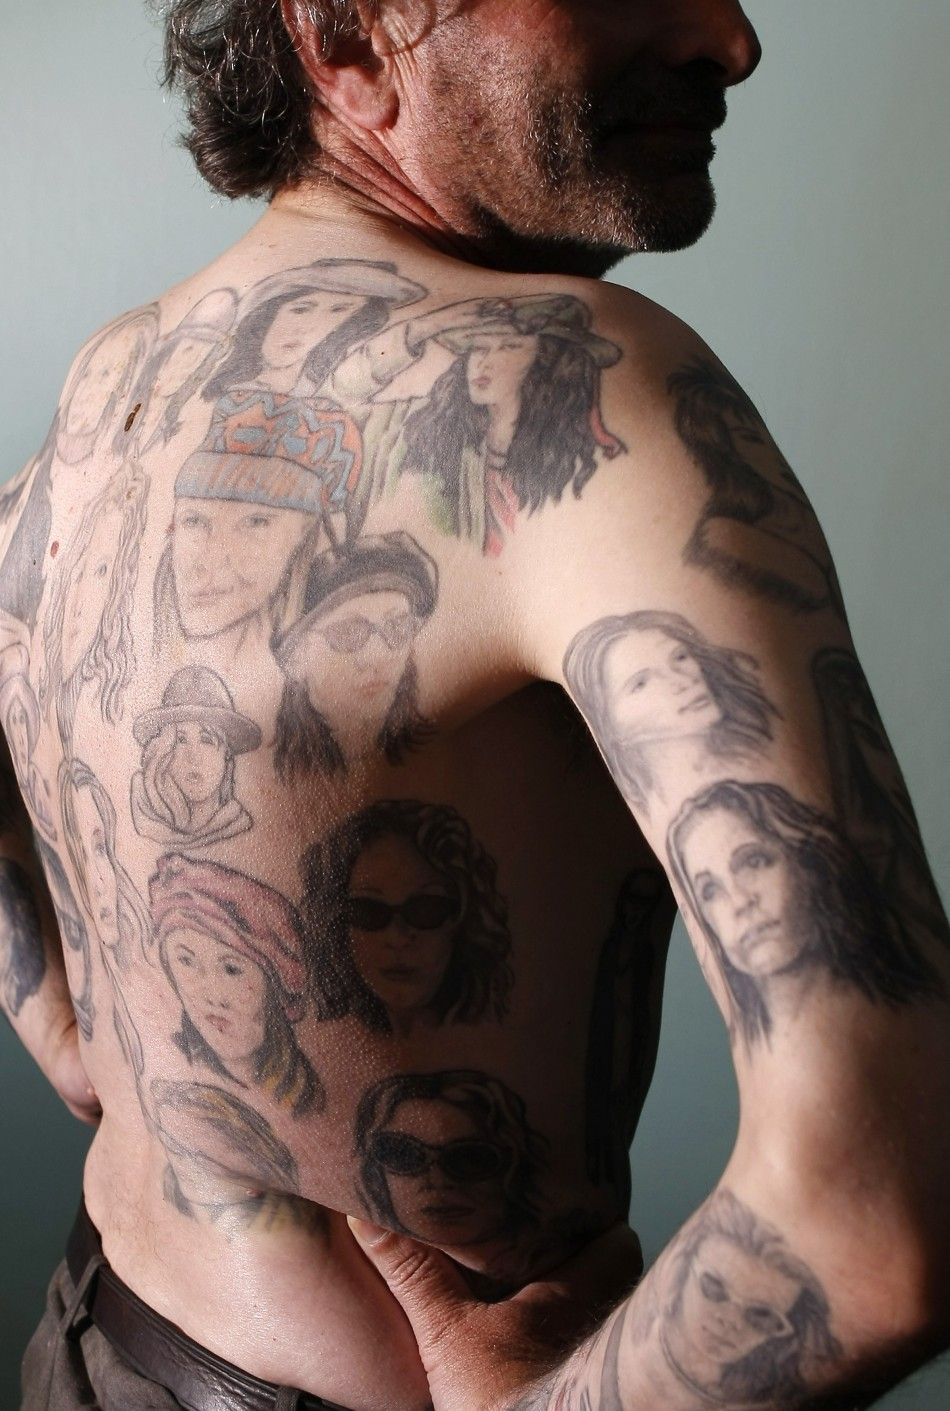 Aussie Tourist Gets Tattoo, HIV from Indonesia